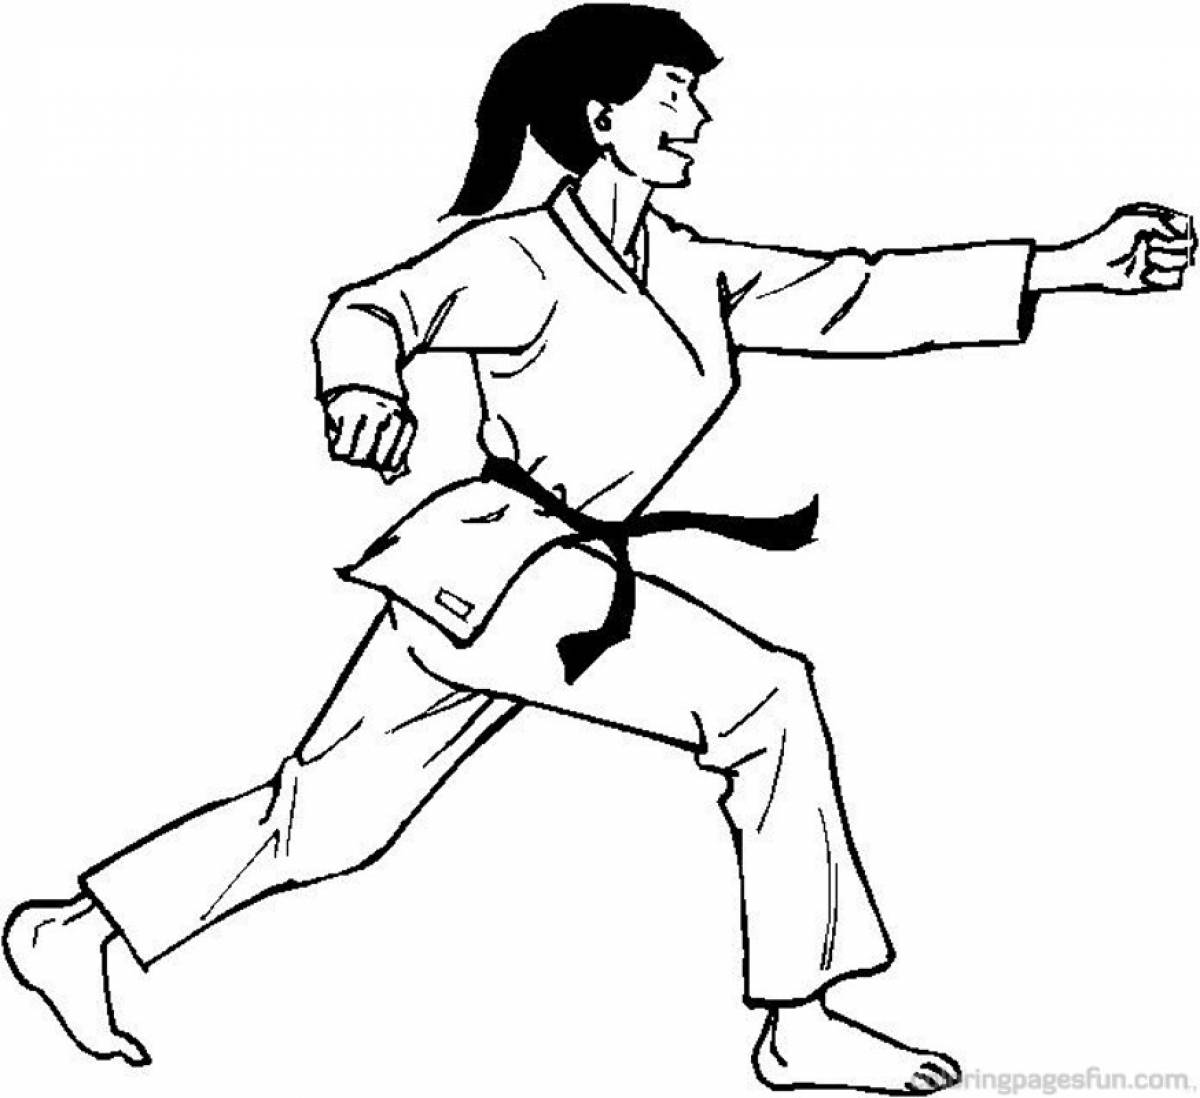 Karate woman